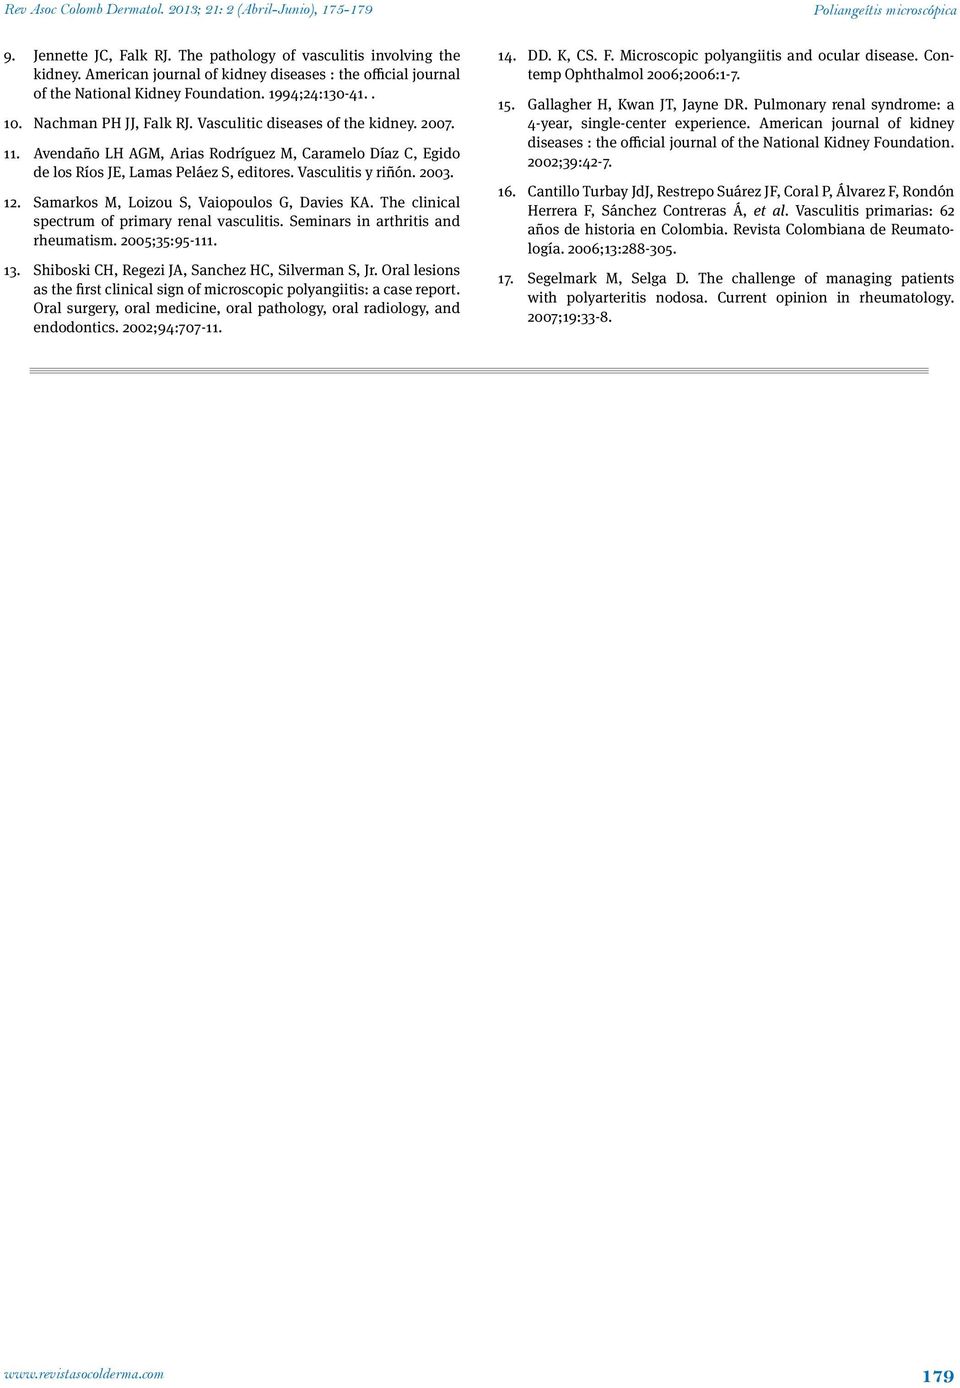 Samarkos M, Loizou S, Vaiopoulos G, Davies KA. The clinical spectrum of primary renal vasculitis. Seminars in arthritis and rheumatism. 2005;35:95-111. 13.